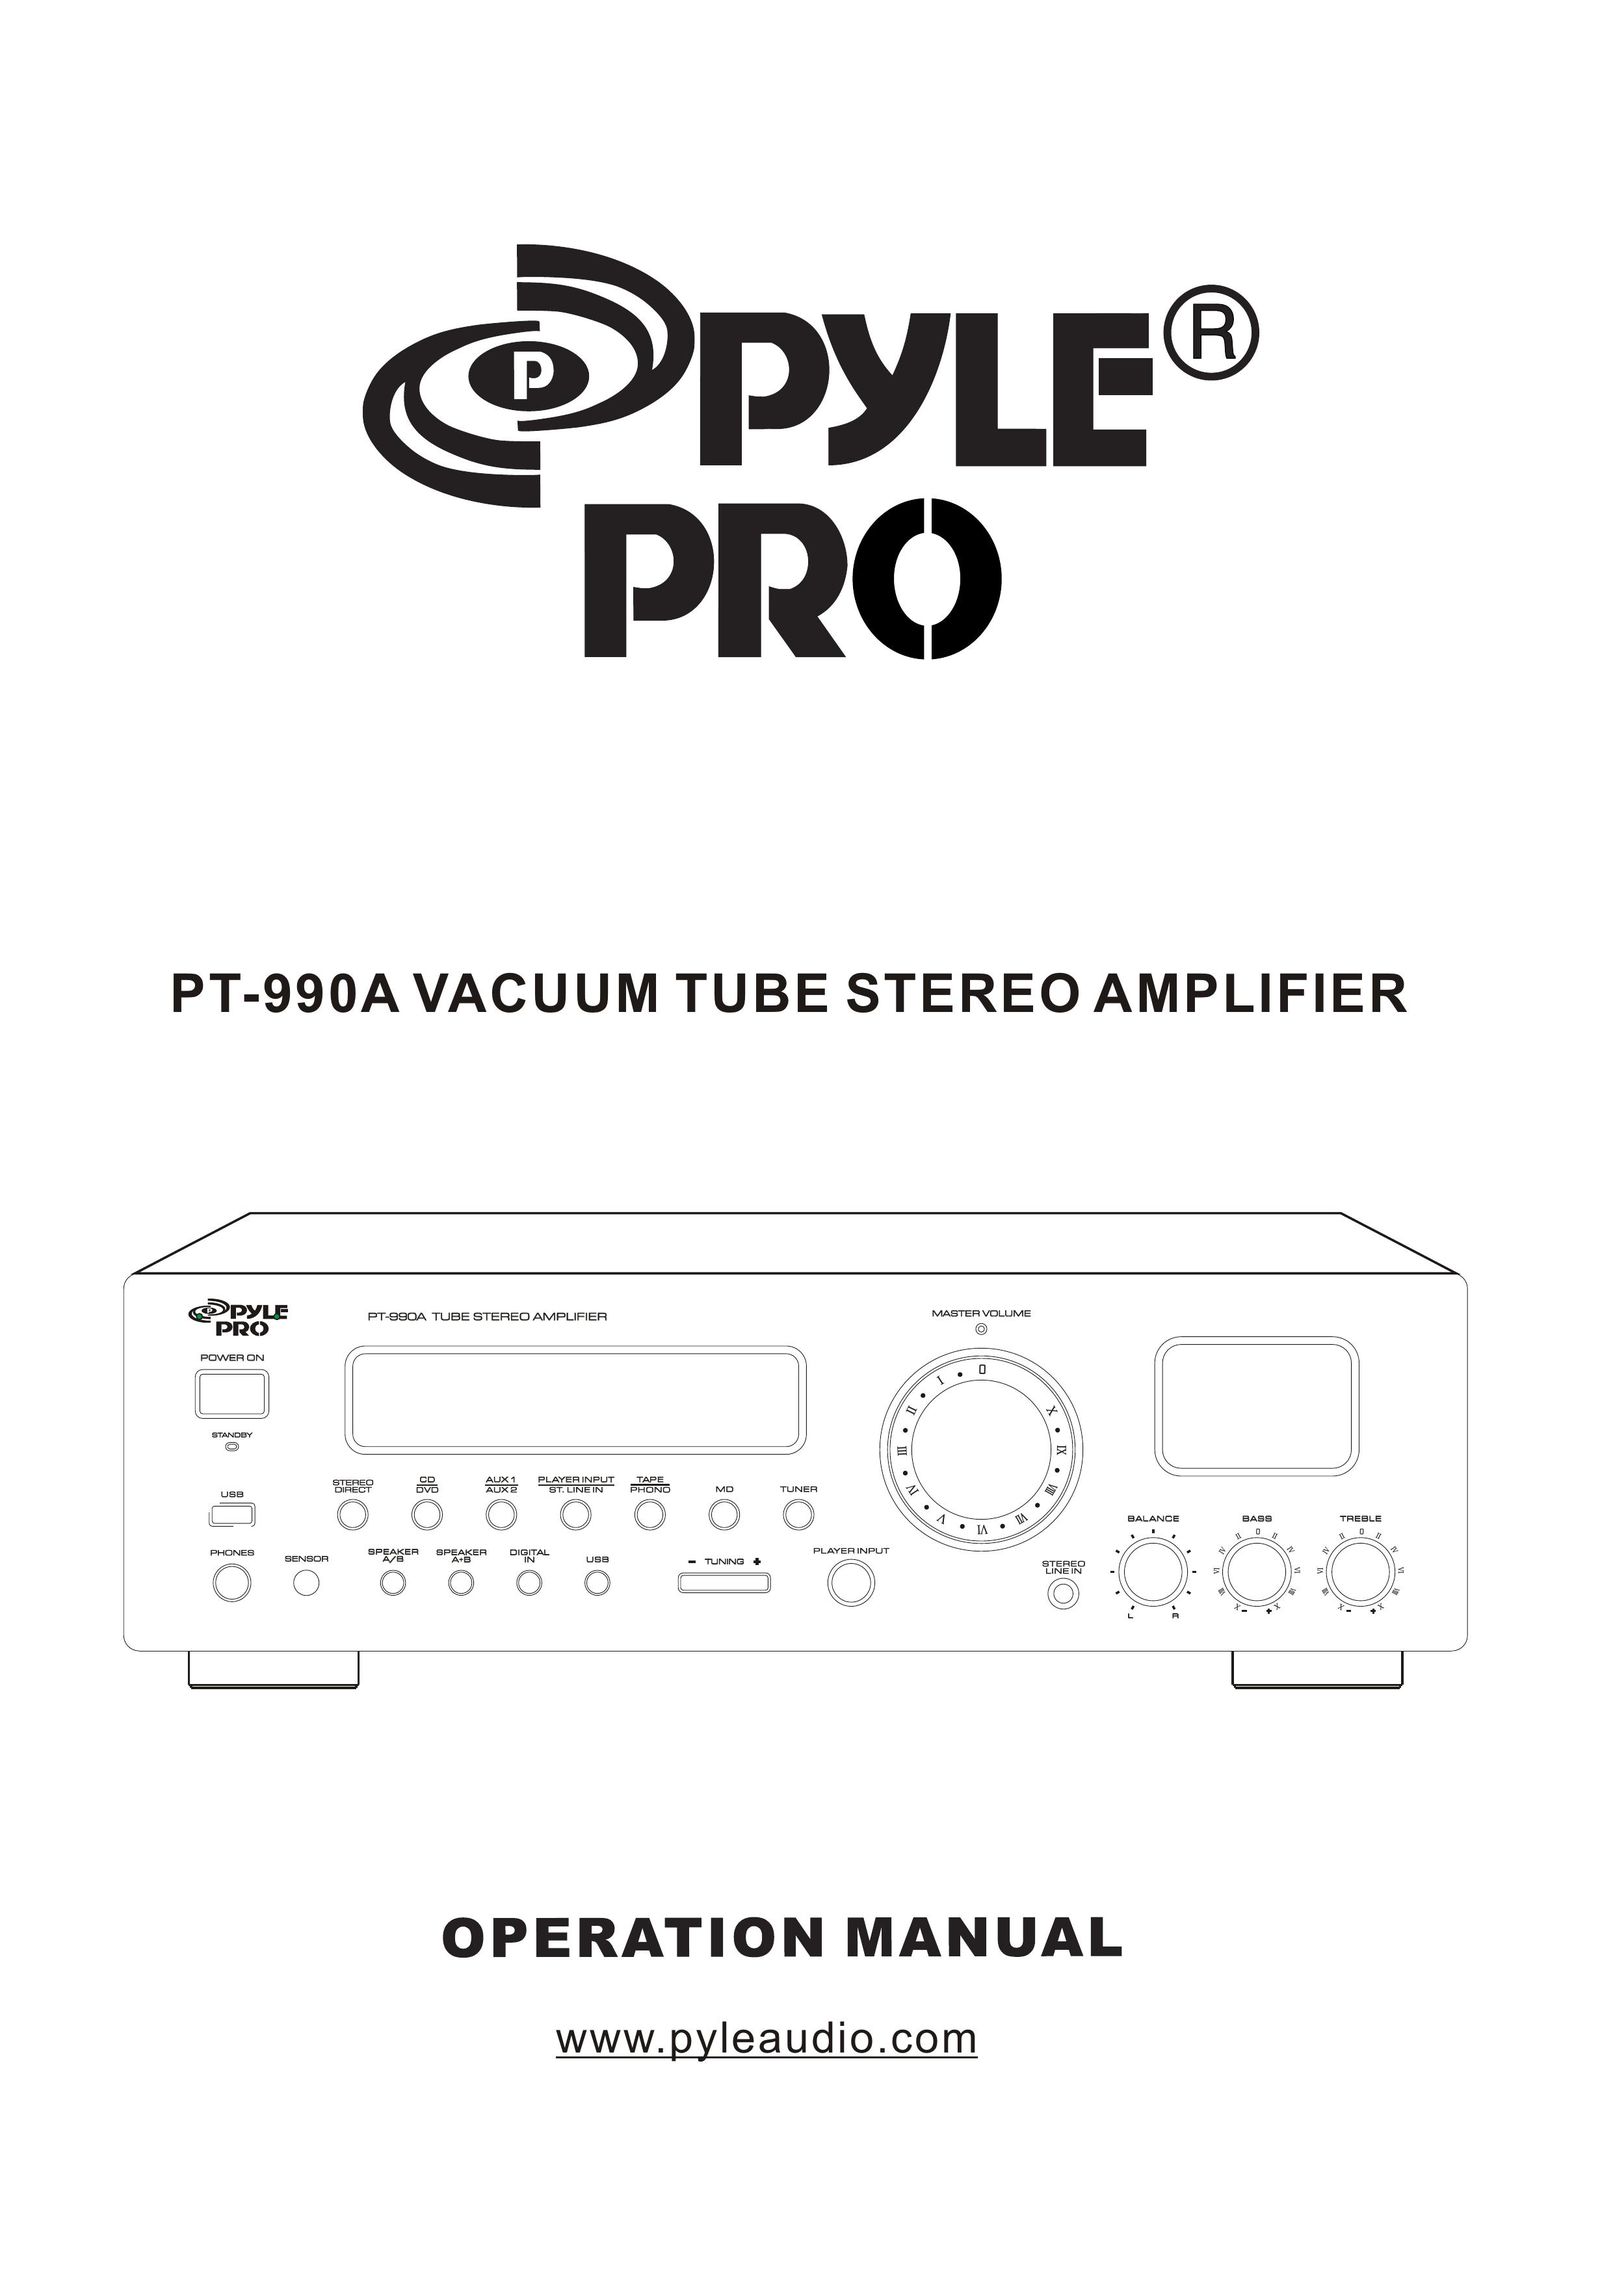 Radio Shack PT-990A Stereo Amplifier User Manual